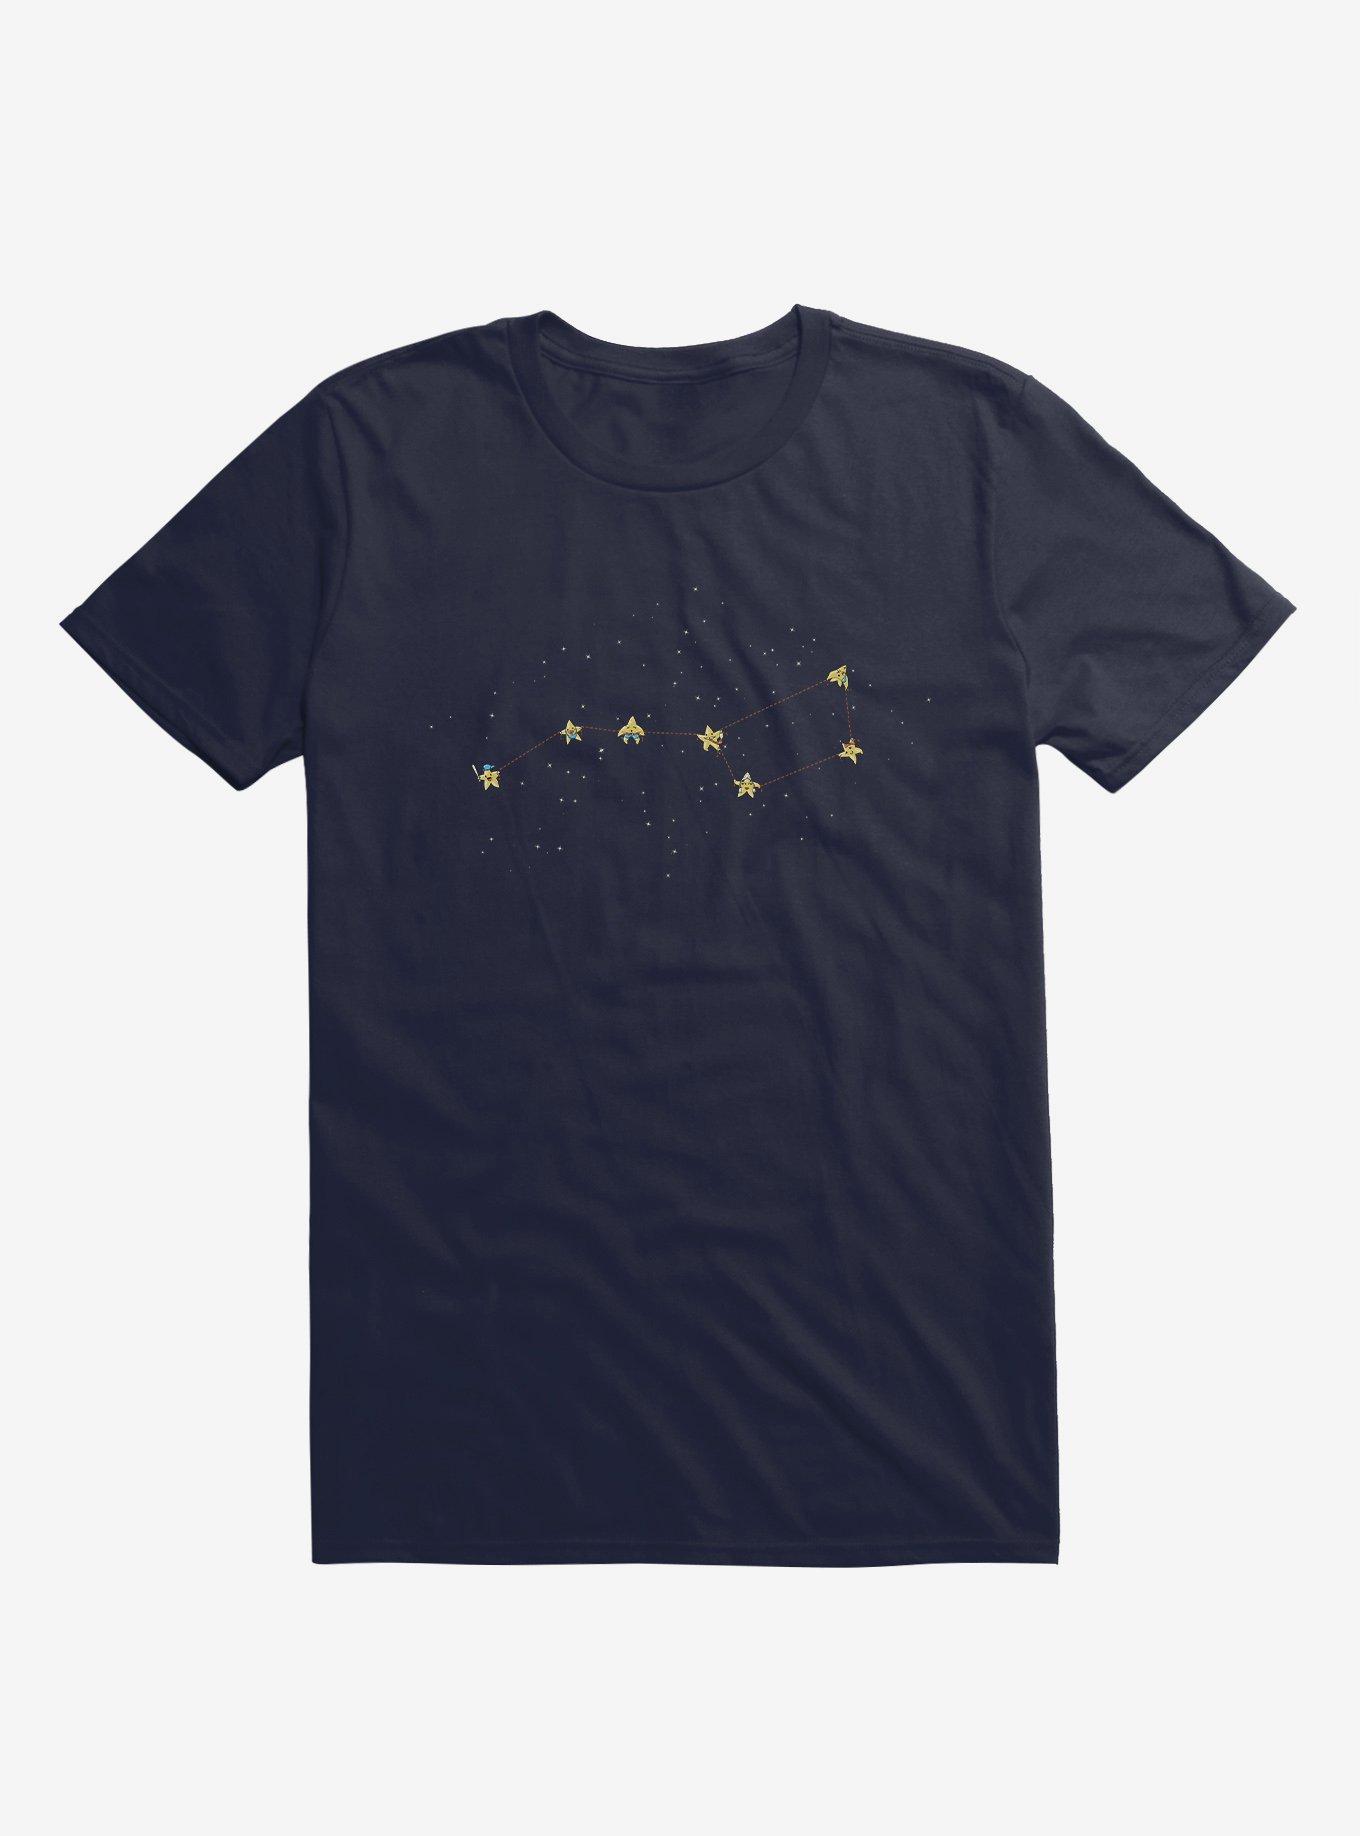 Family Star Constellation Navy Blue T-Shirt, NAVY, hi-res